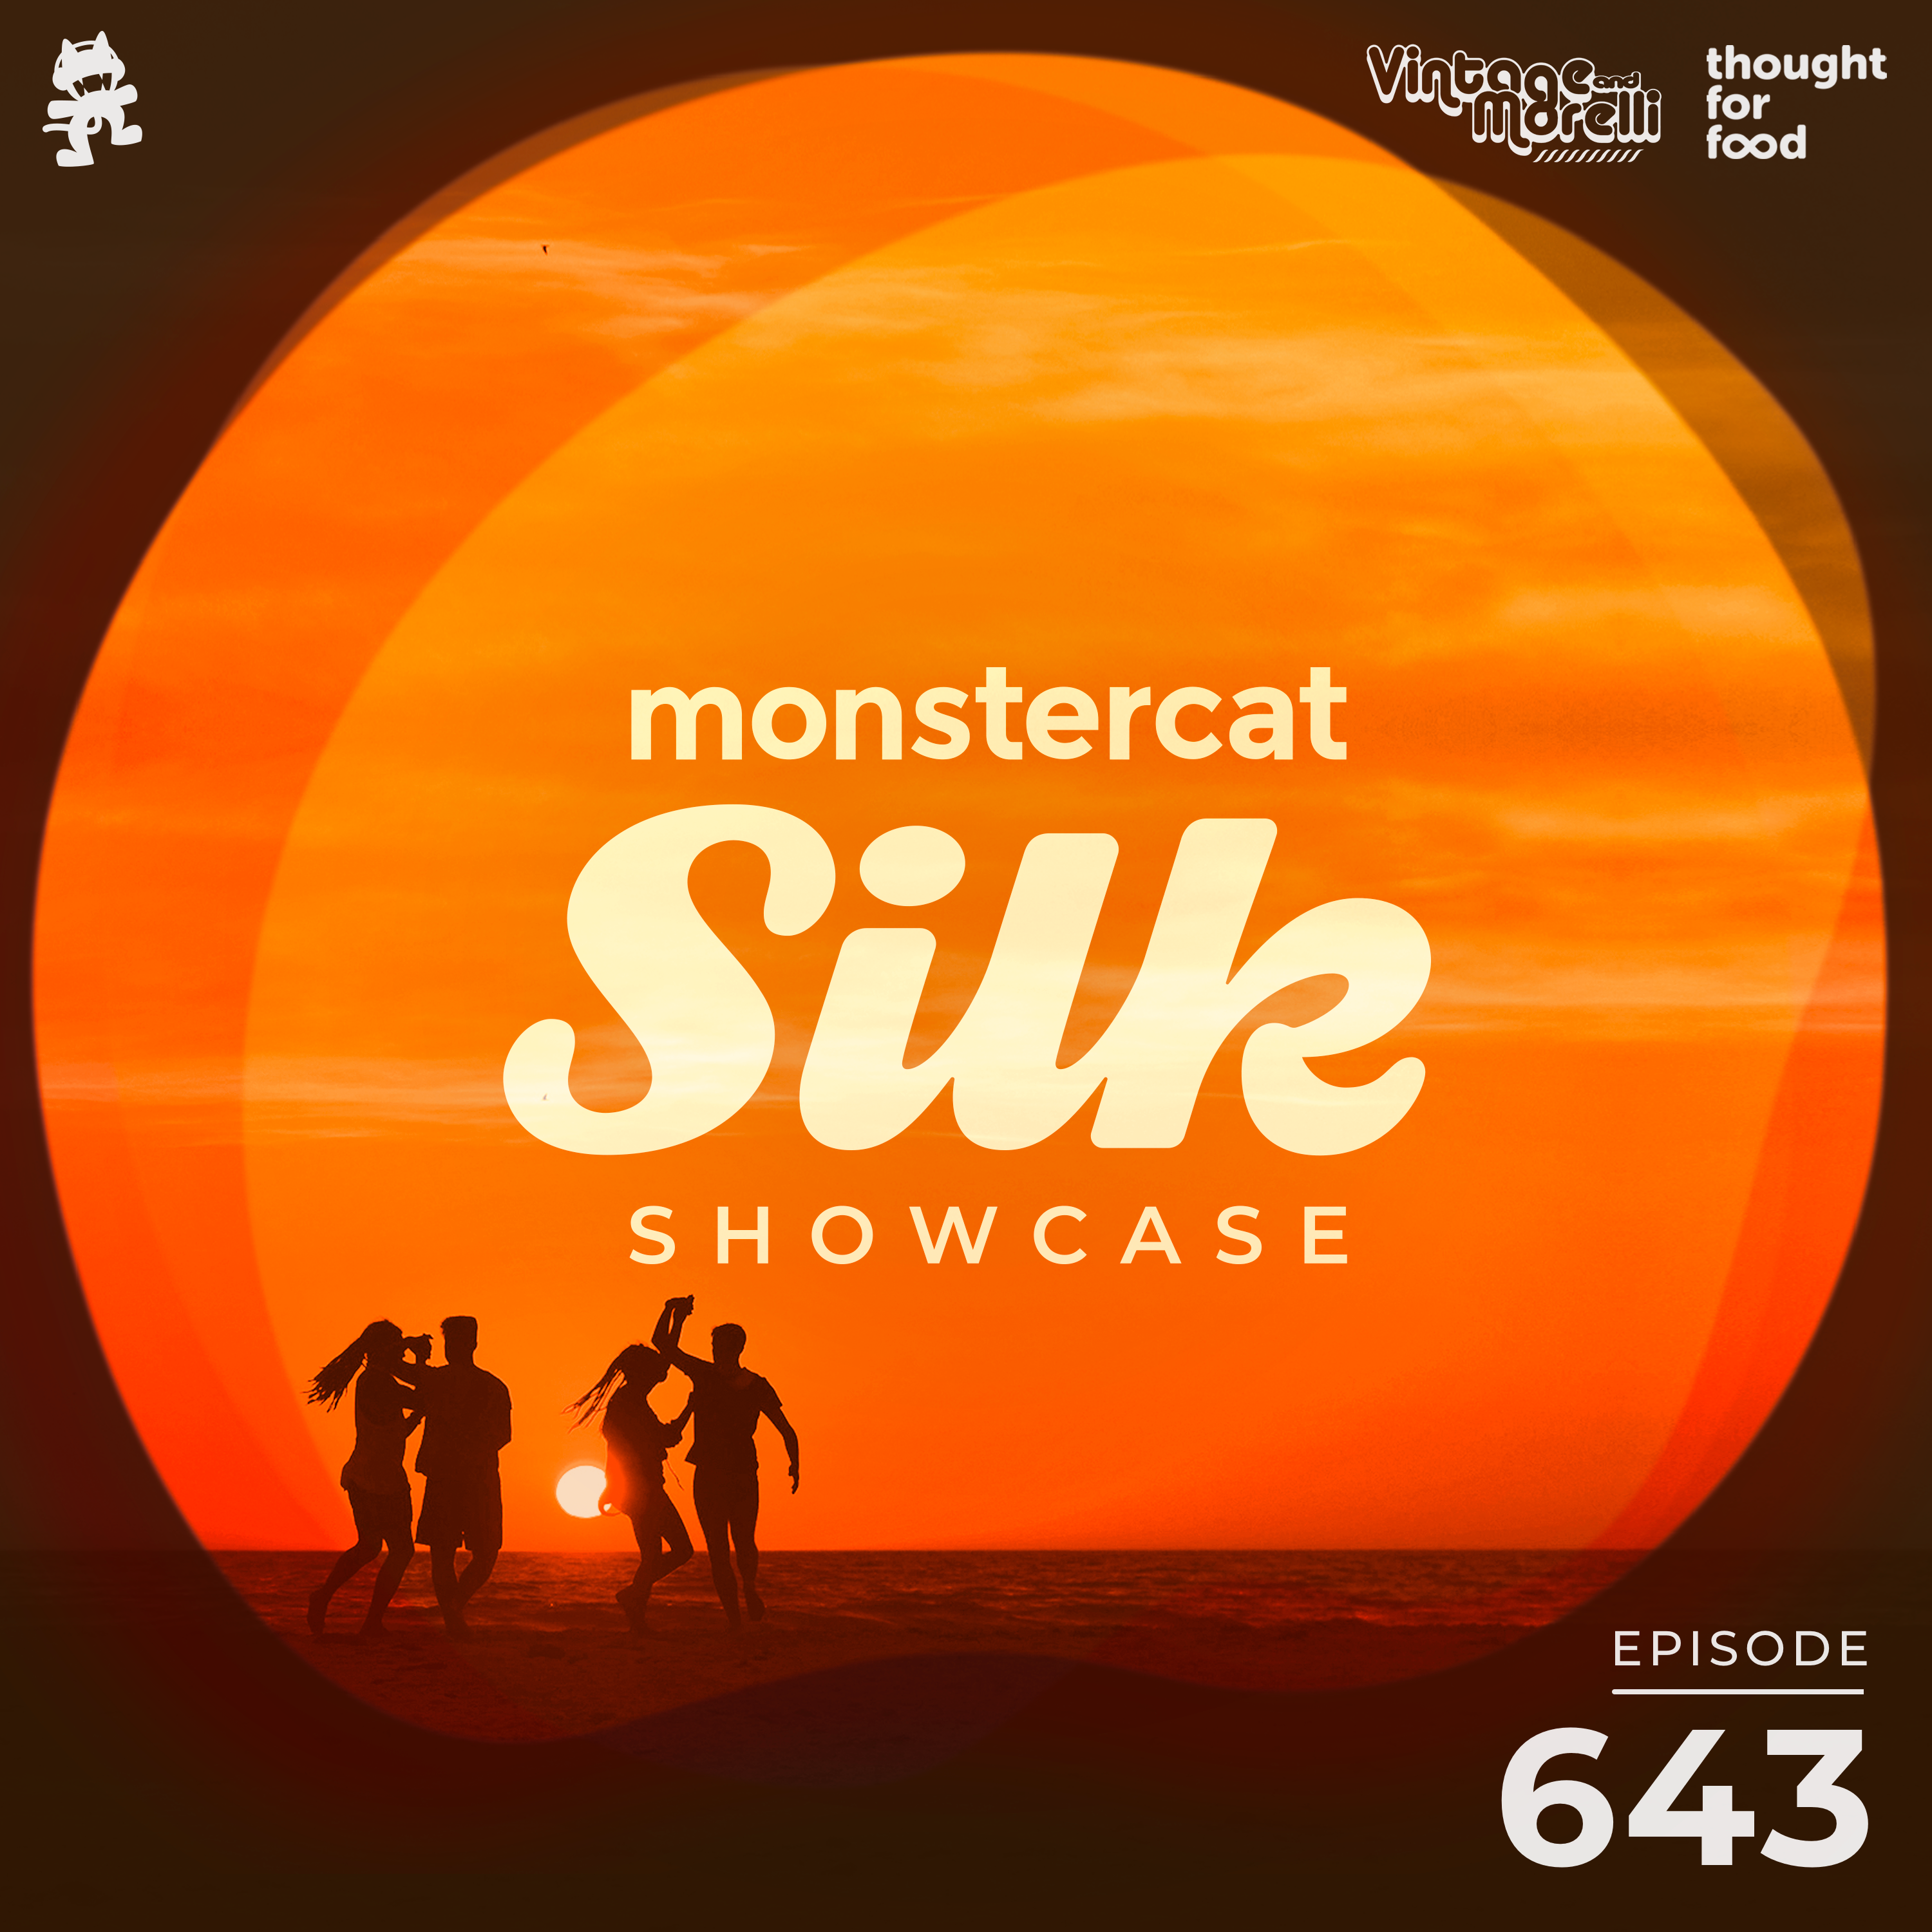 Monstercat Silk Showcase Earth Day 2022